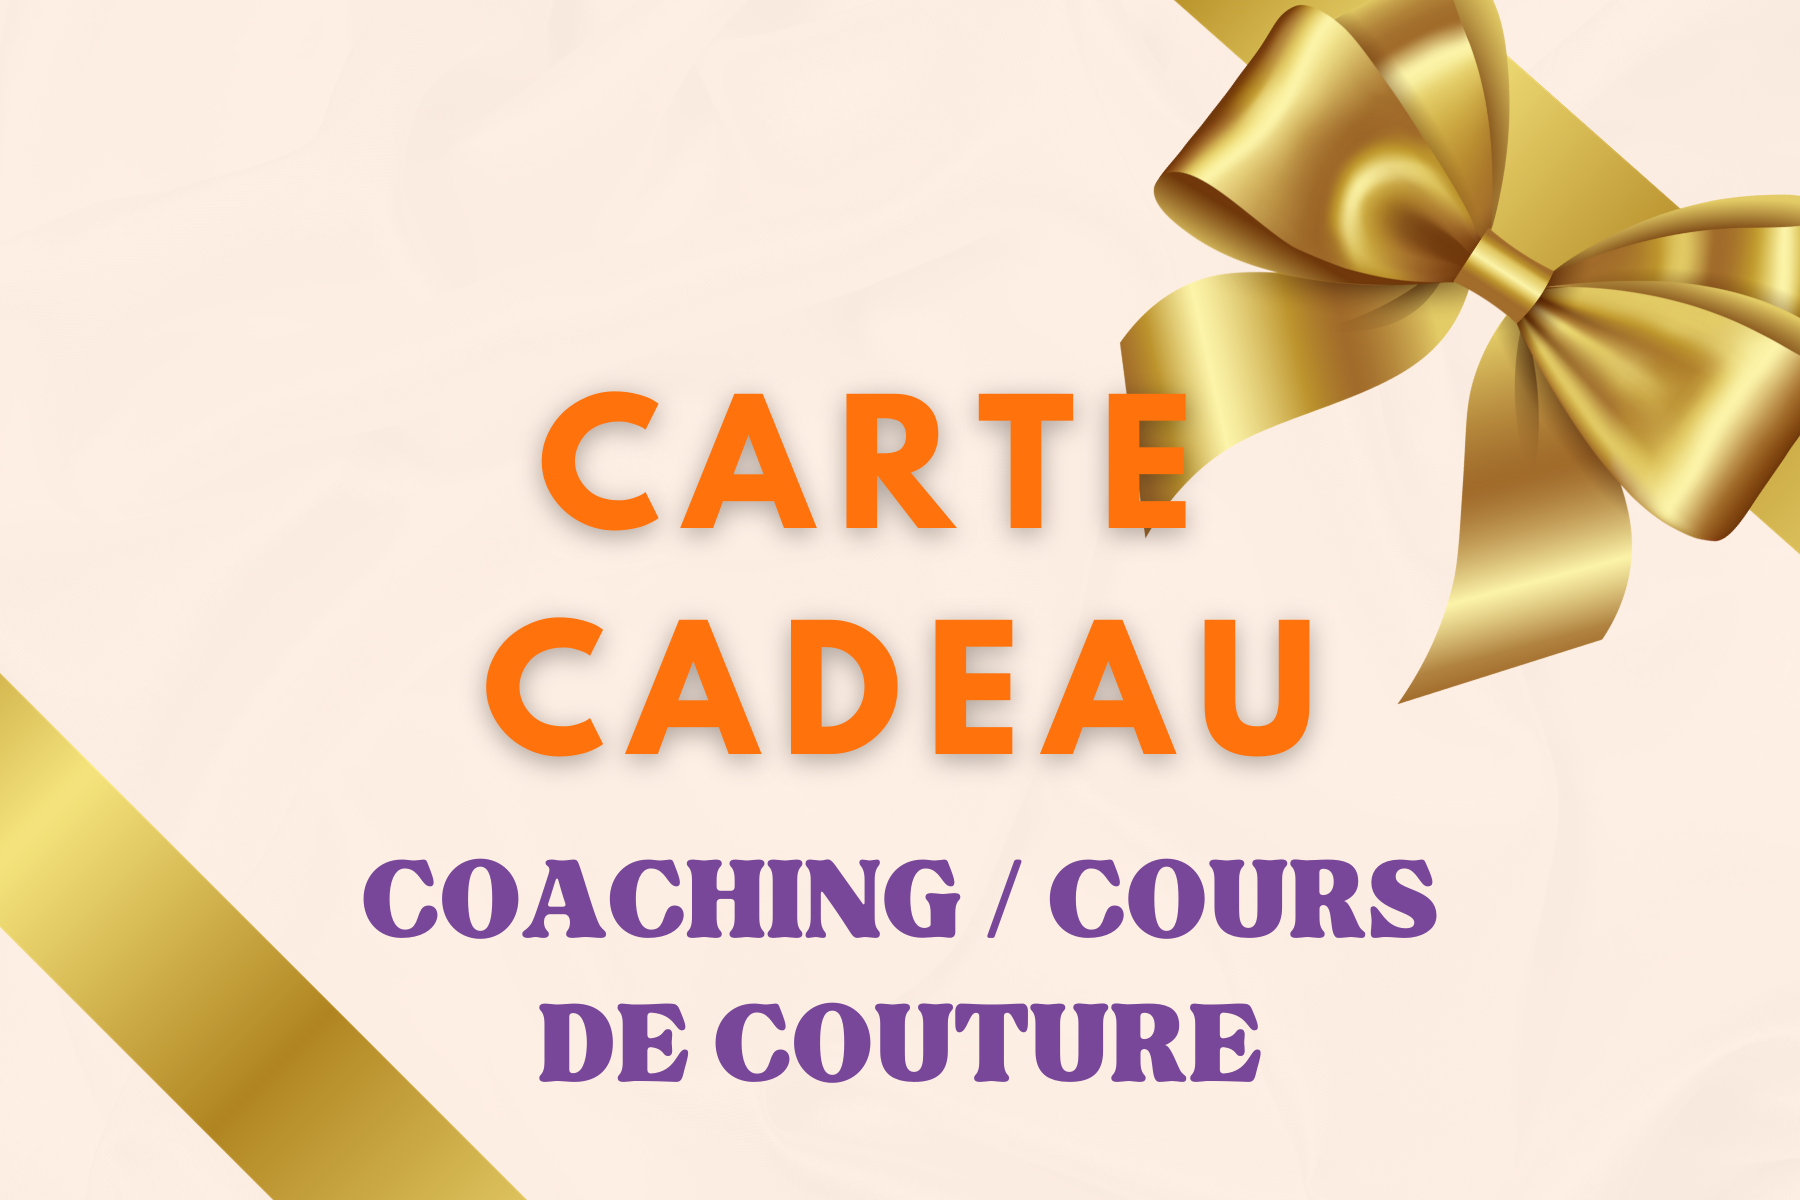 CARTE CADEAU COACHING / COURS DE COUTURE – Filautia